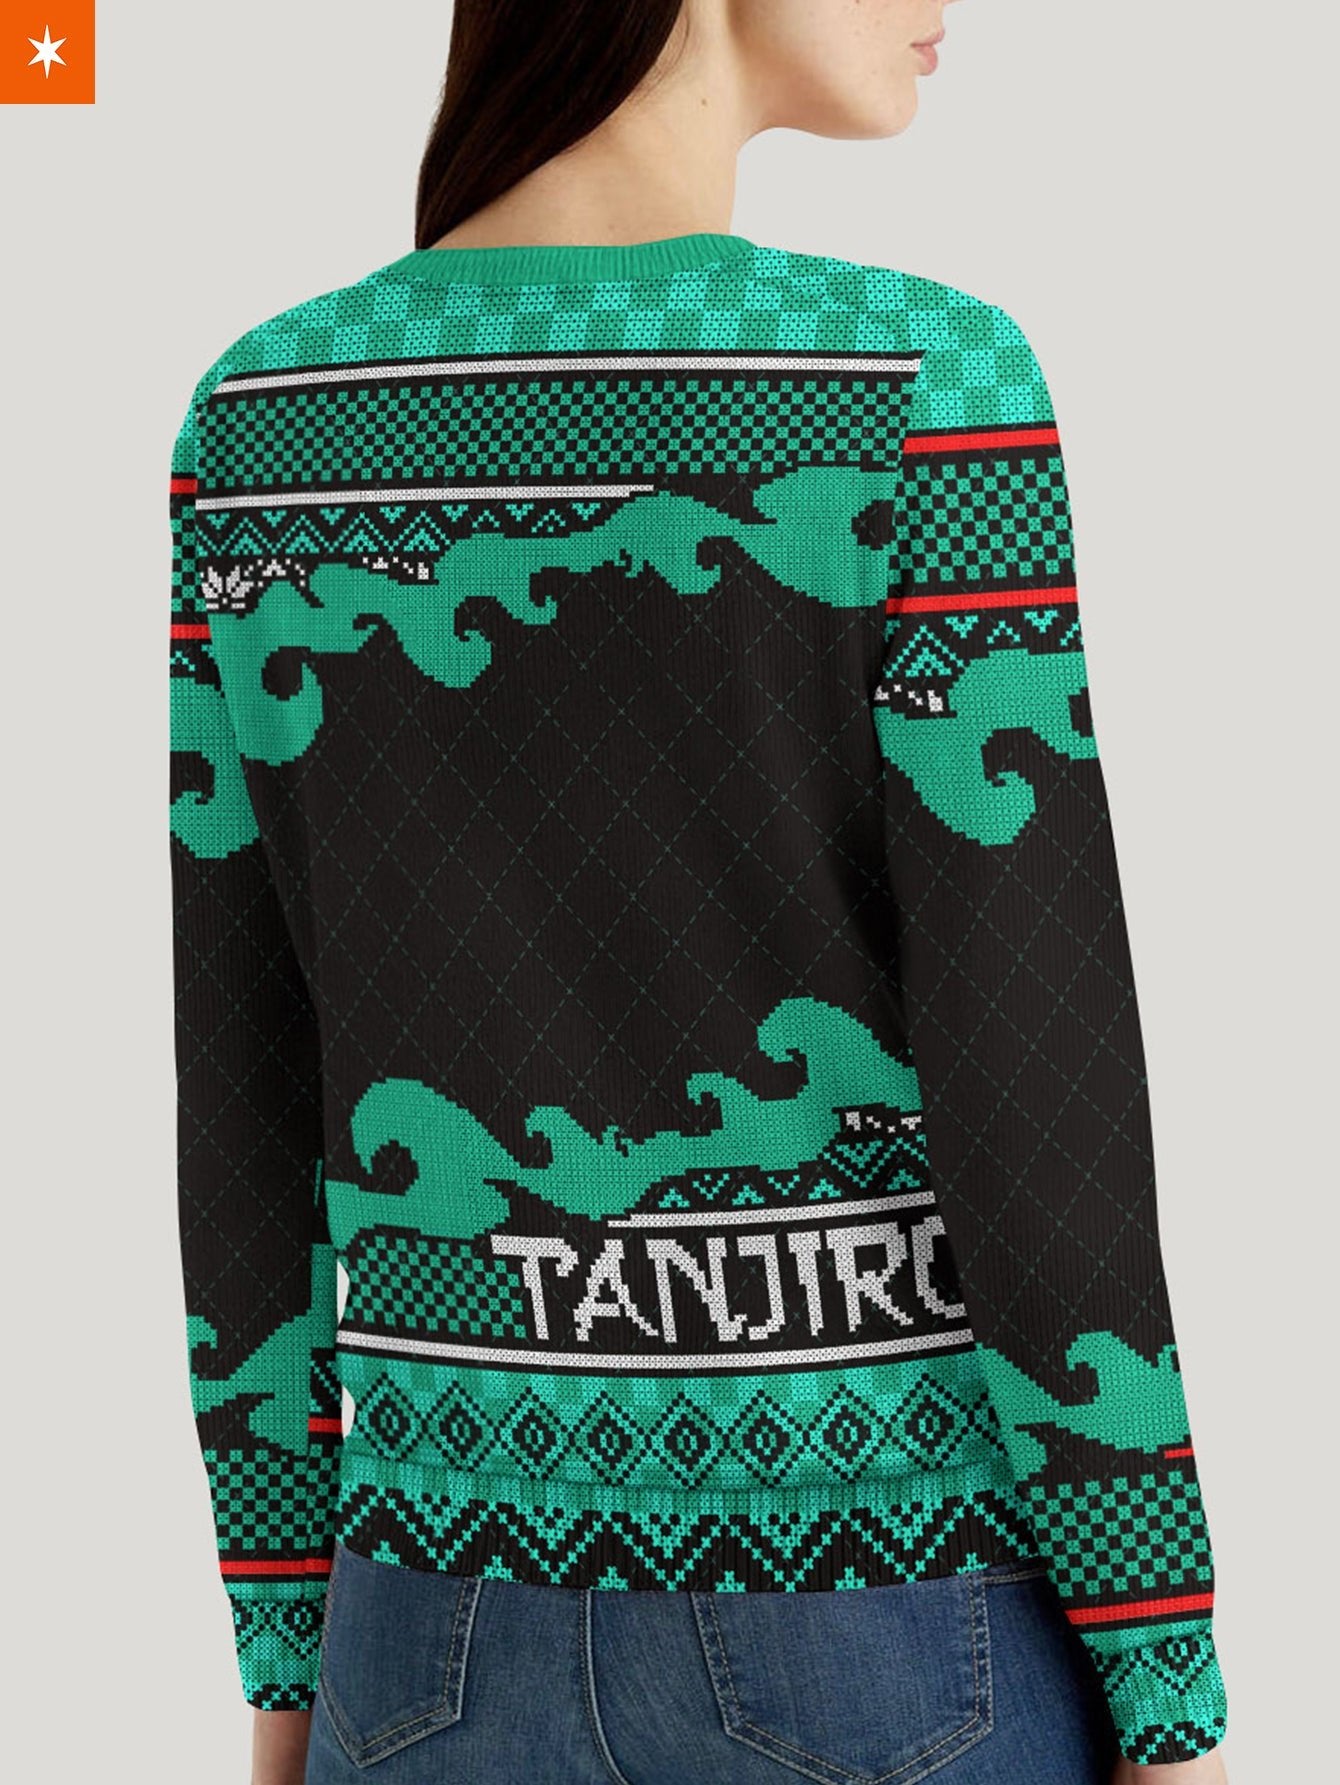 Fandomaniax - Tanjiro Christmas Unisex Wool Sweater